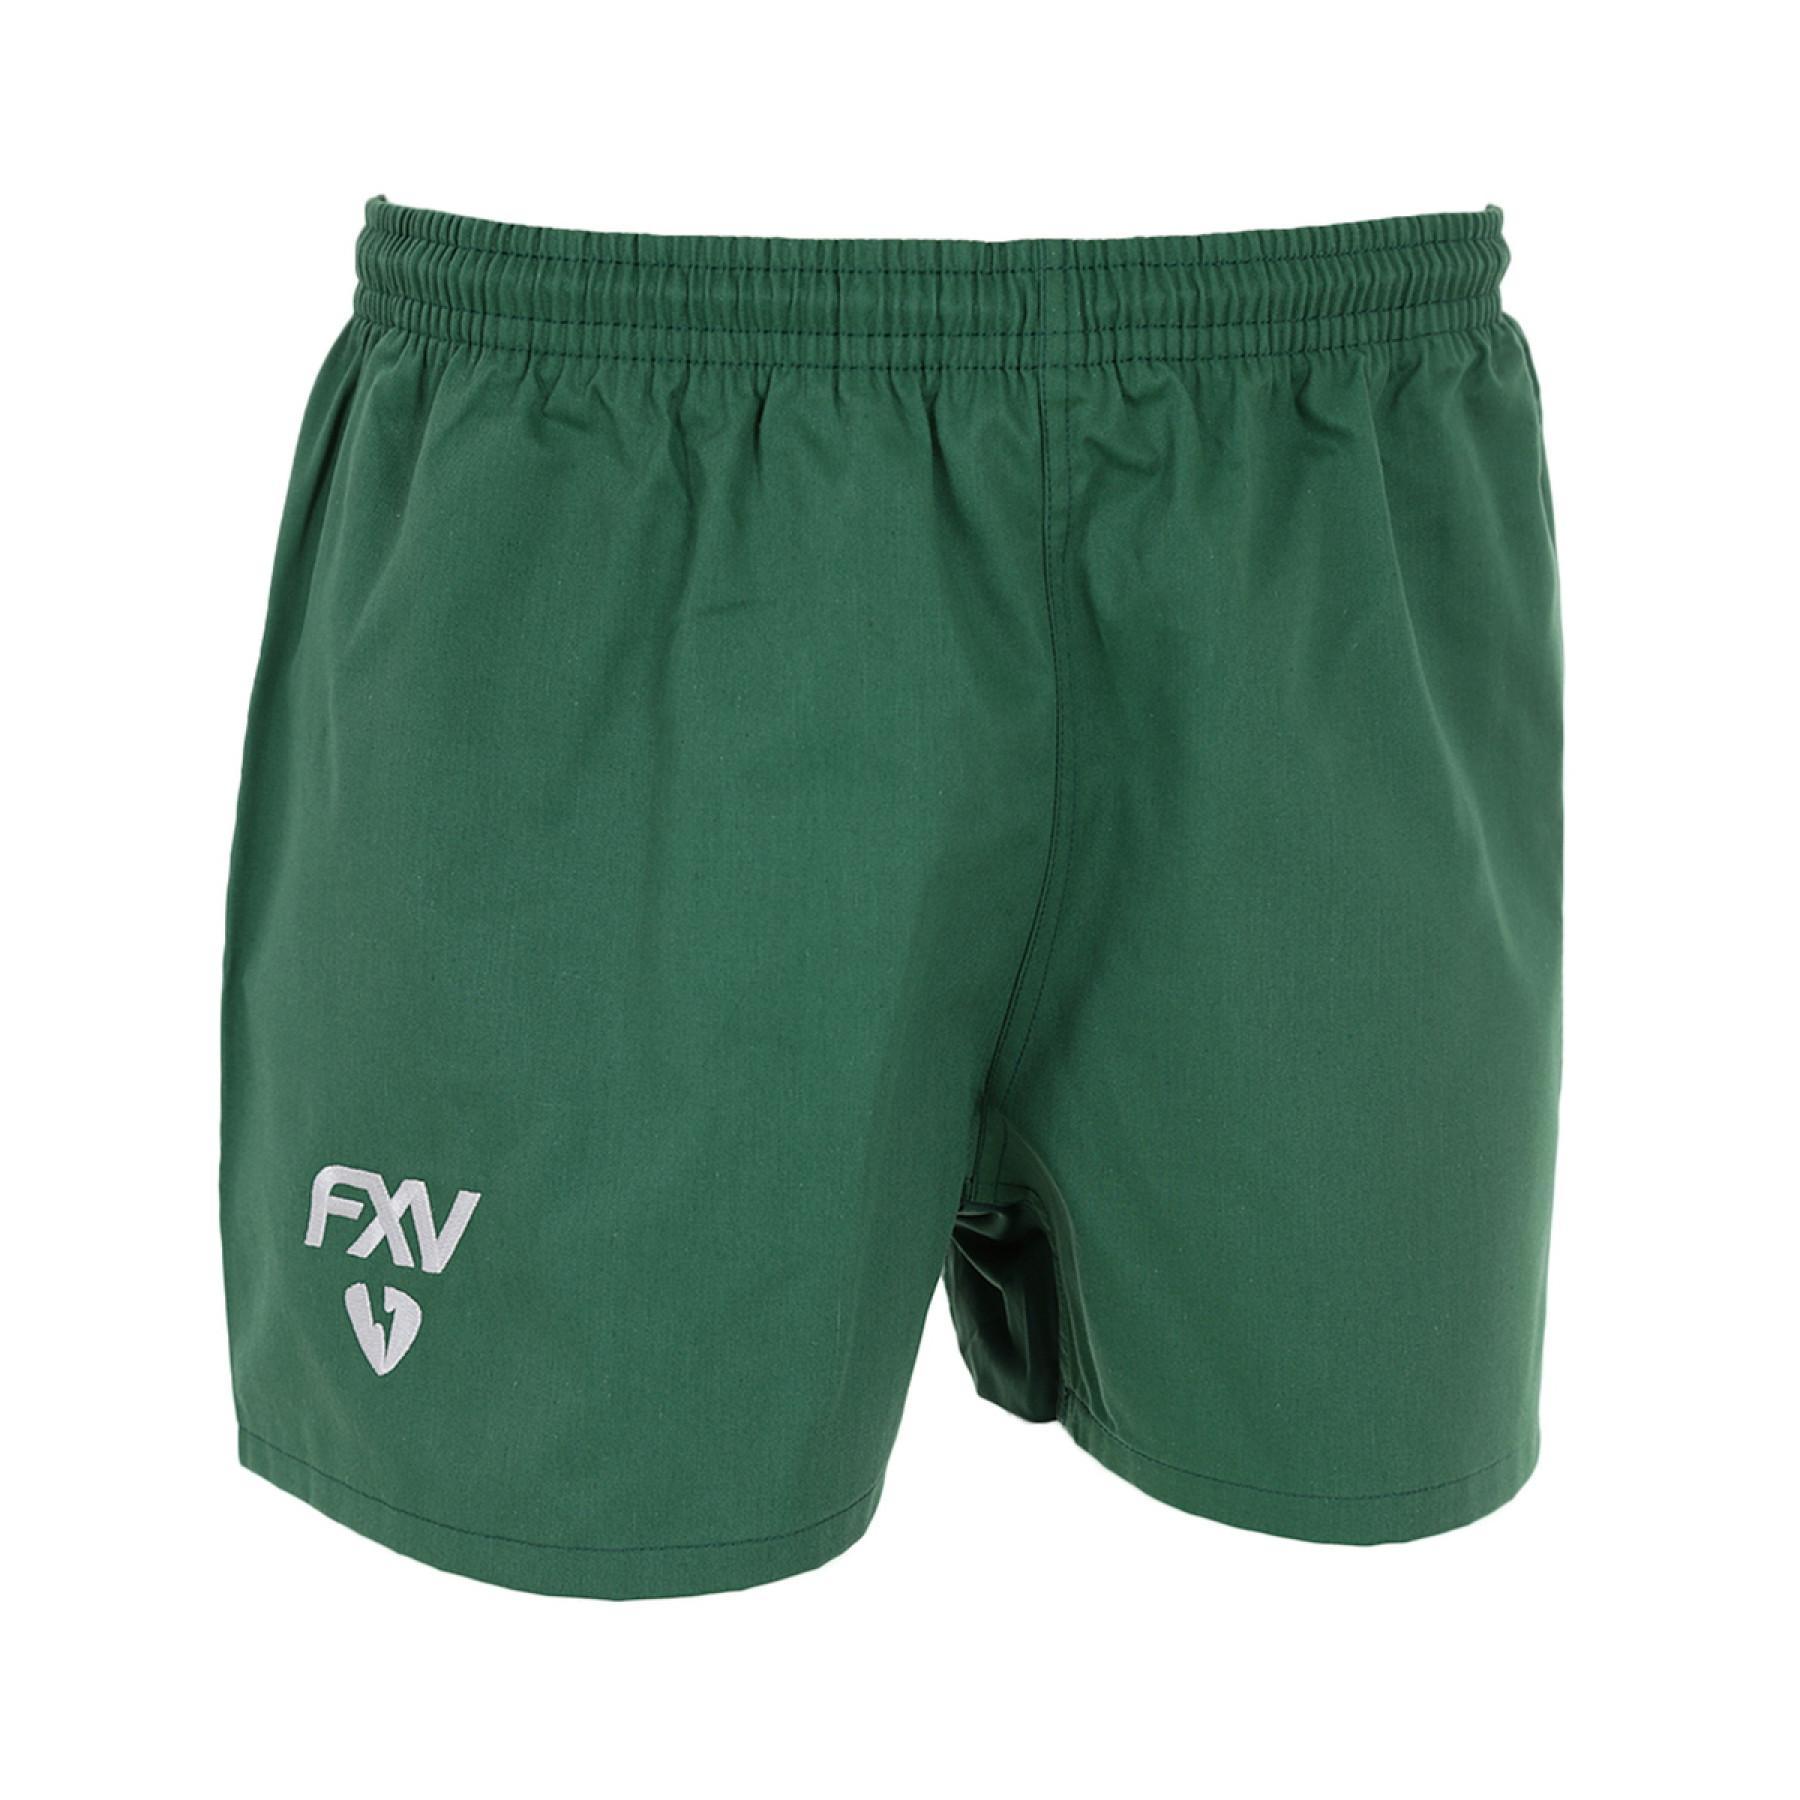 Kinder shorts Force XV pixy